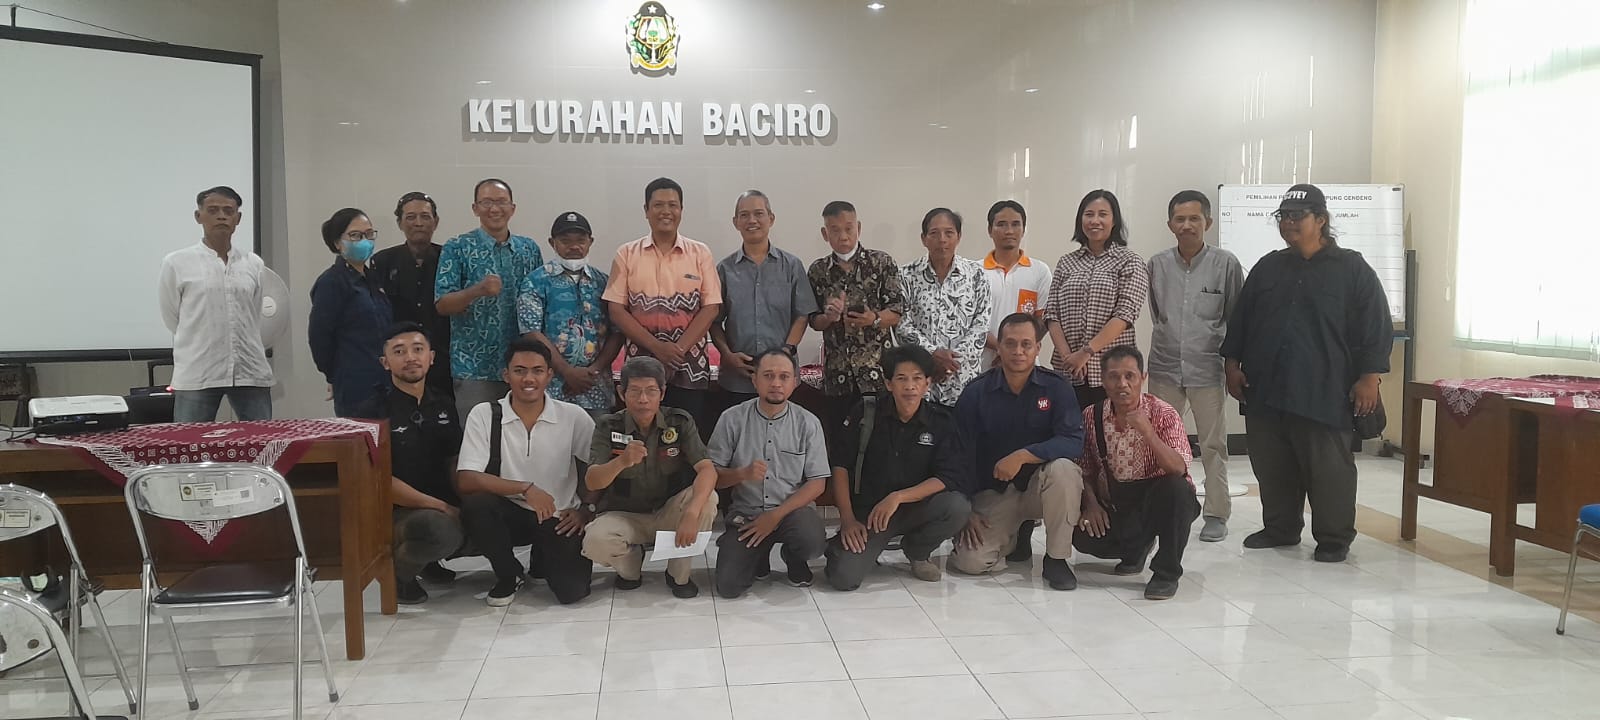 Menjawab Tantangan Kemajuan Dunia Kepariwisataan di Kota Yogyakarta, Kelurahan Baciro Menyelenggarakan Pelatihan Guide.